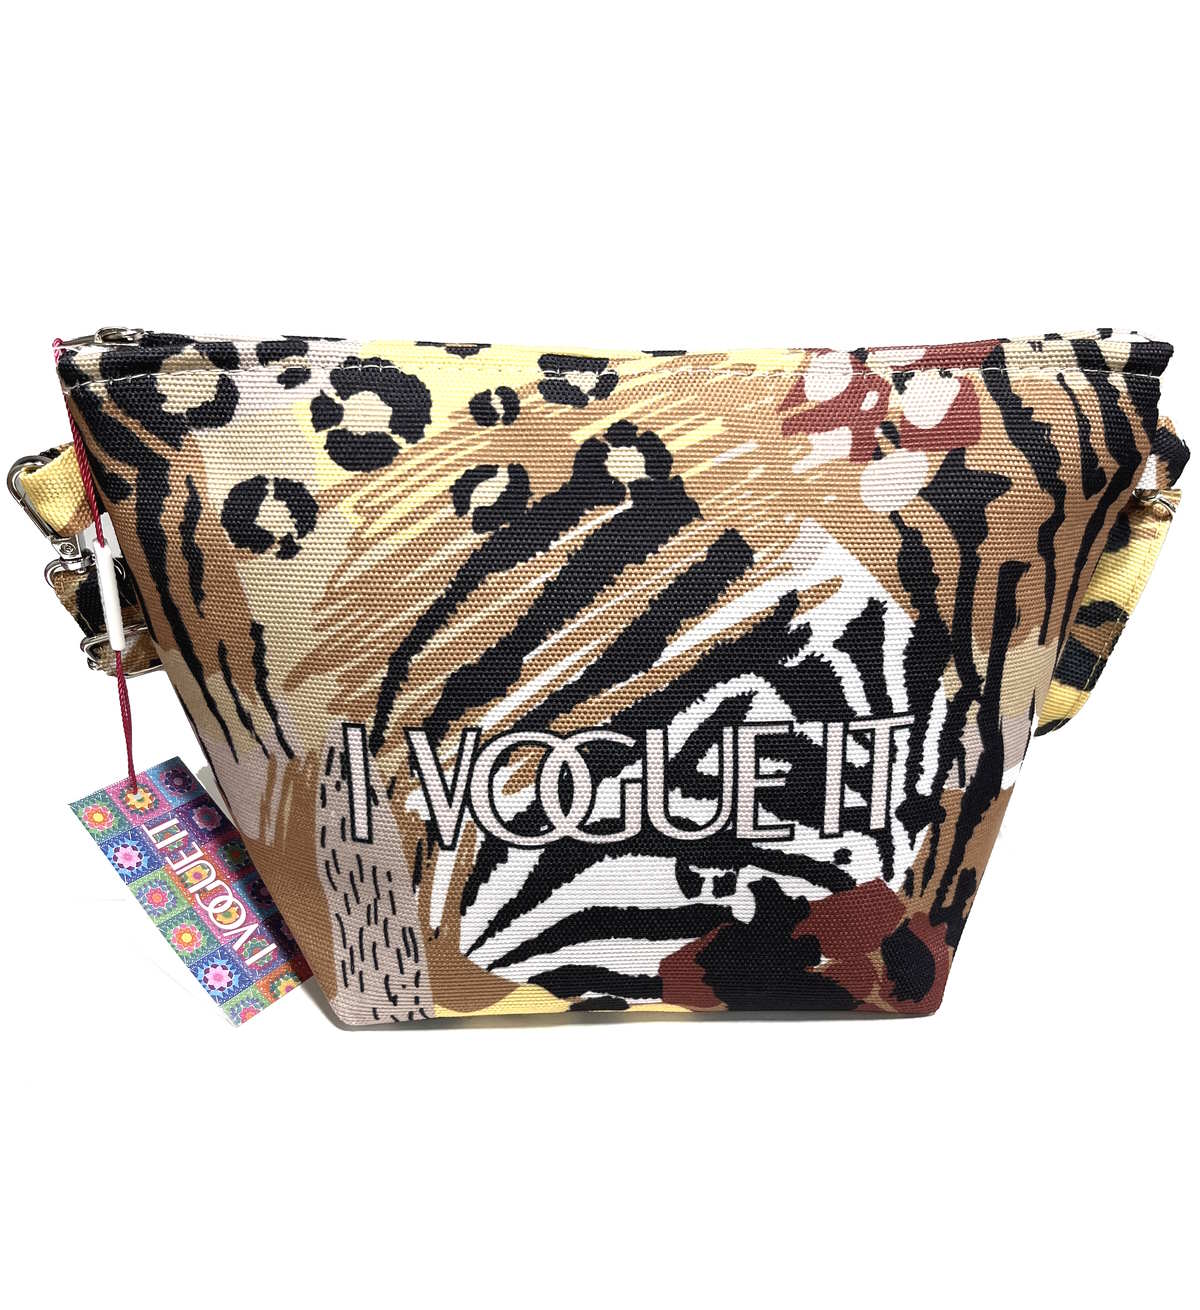 Crossbody bag, brand I Vogue It, art. 24332.364